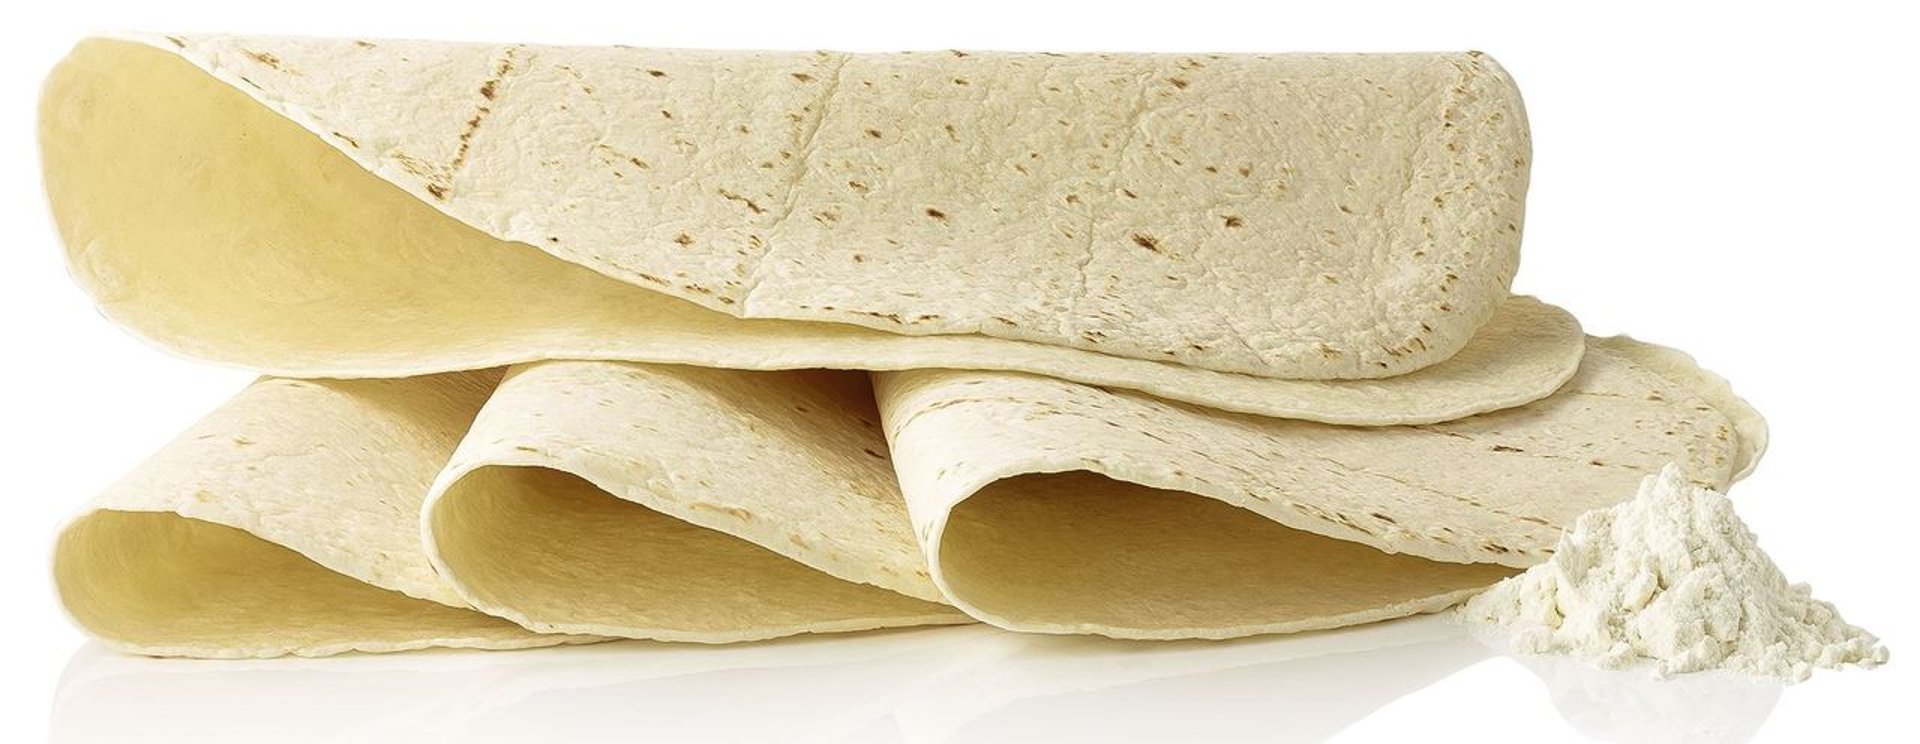 SALOMON FoodWorld - Wrap Tortilla Traditional Plain tiefgefroren, Ø 30 cm, 12 Beutel mit 12 Tortilla à 144 g 13,3 kg Karton